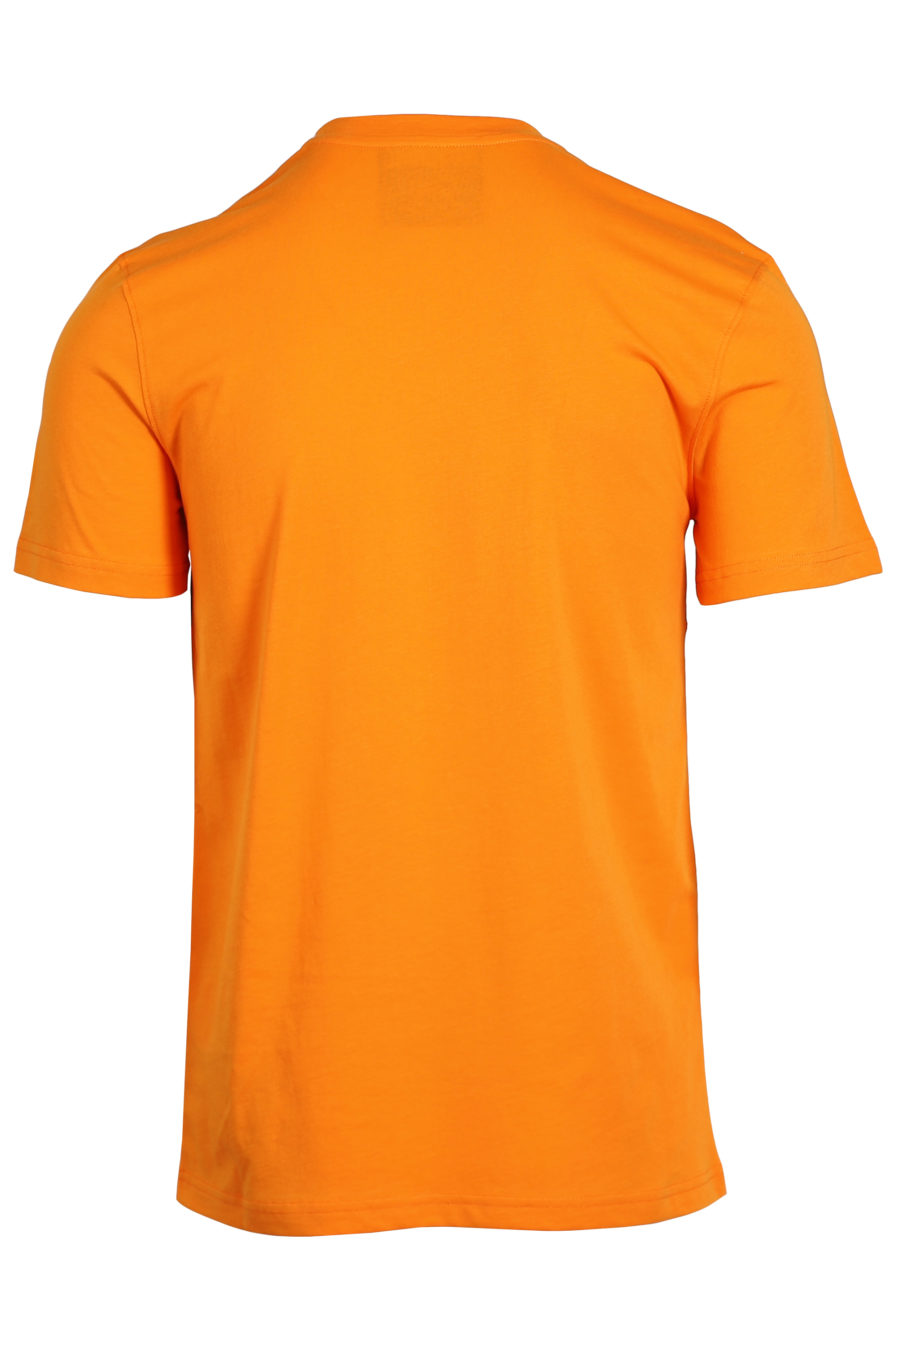 Camiseta naranja logo blanco y negro - IMG 0980